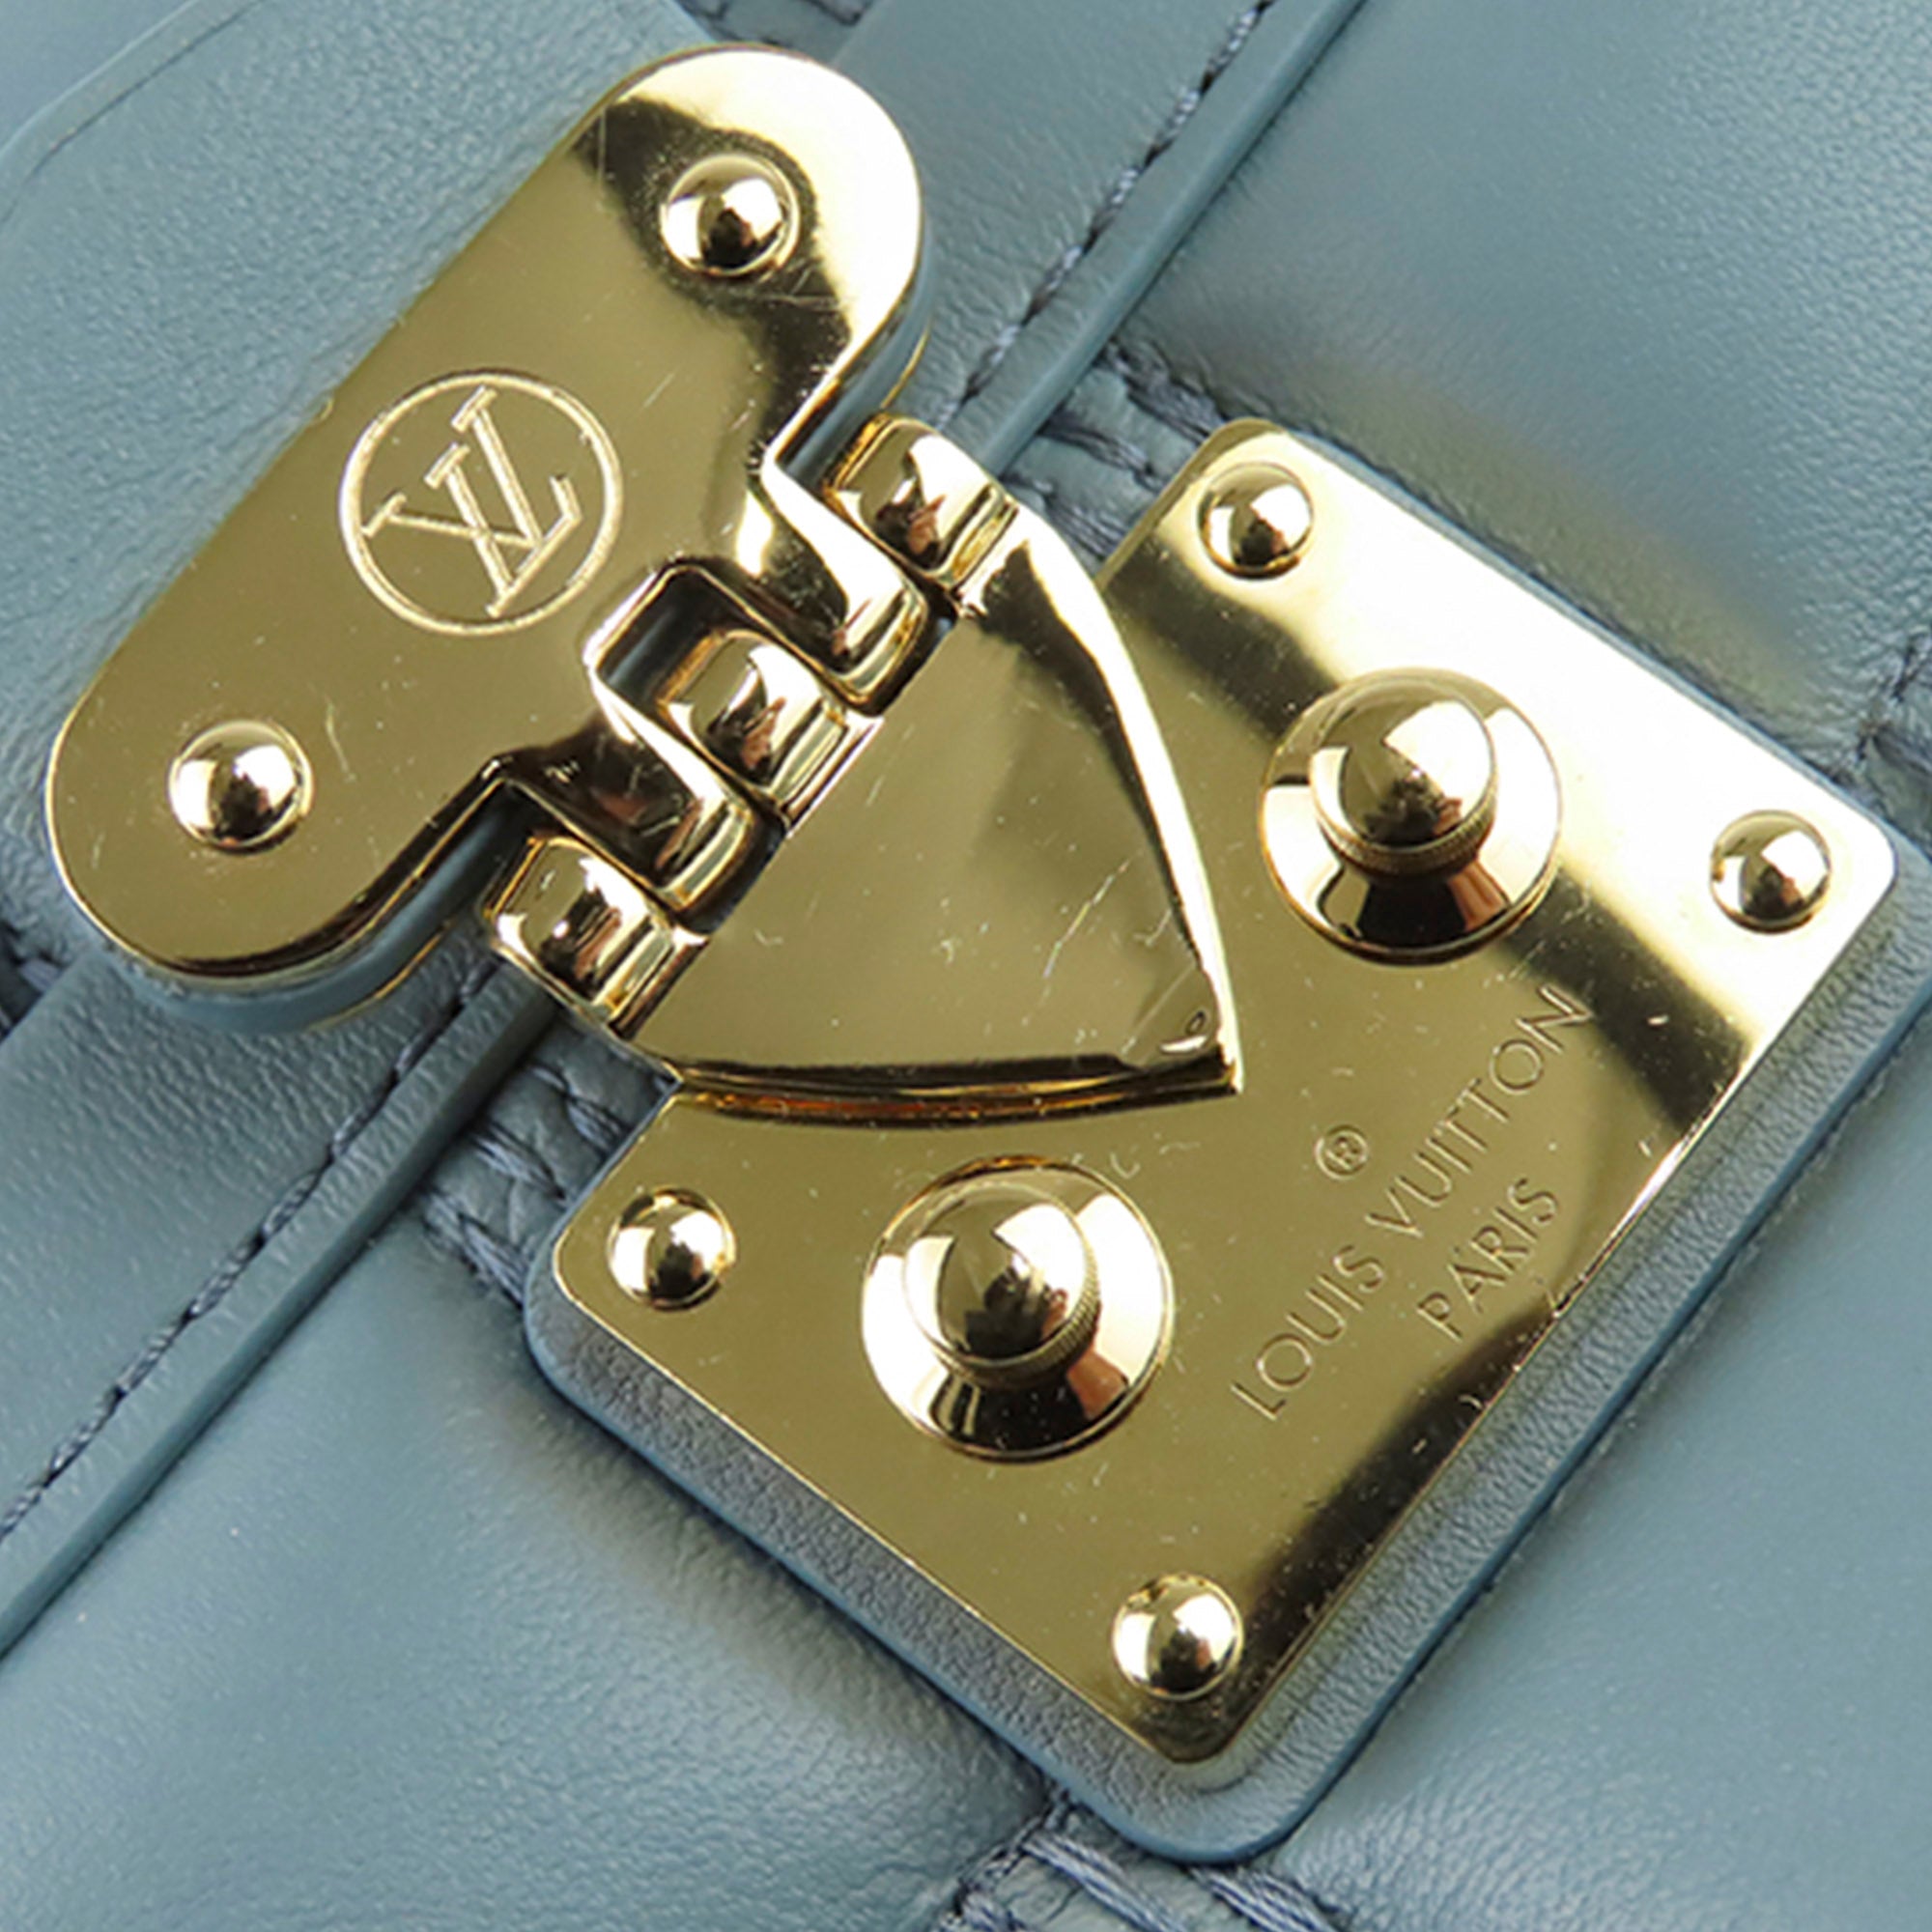 Louis Vuitton Troca PM Handbag Damier Quilt Sheepskin In Blue - Praise To  Heaven